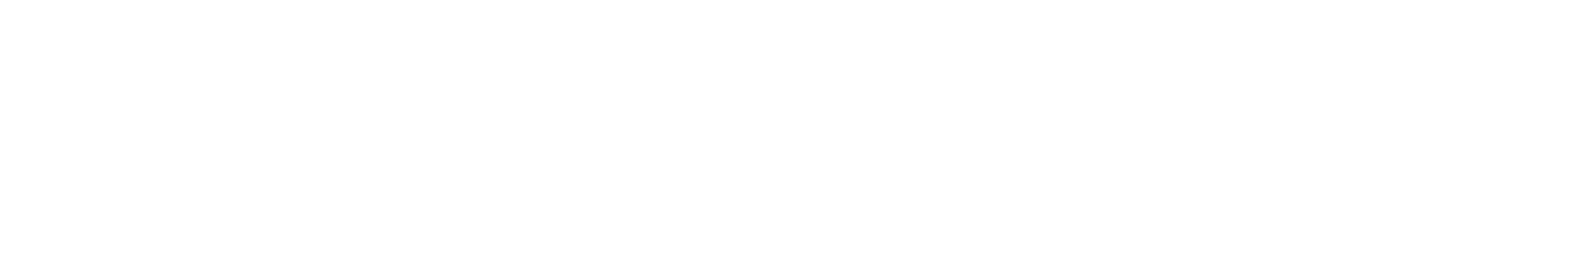 Arendals Fossekompani logo large for dark backgrounds (transparent PNG)